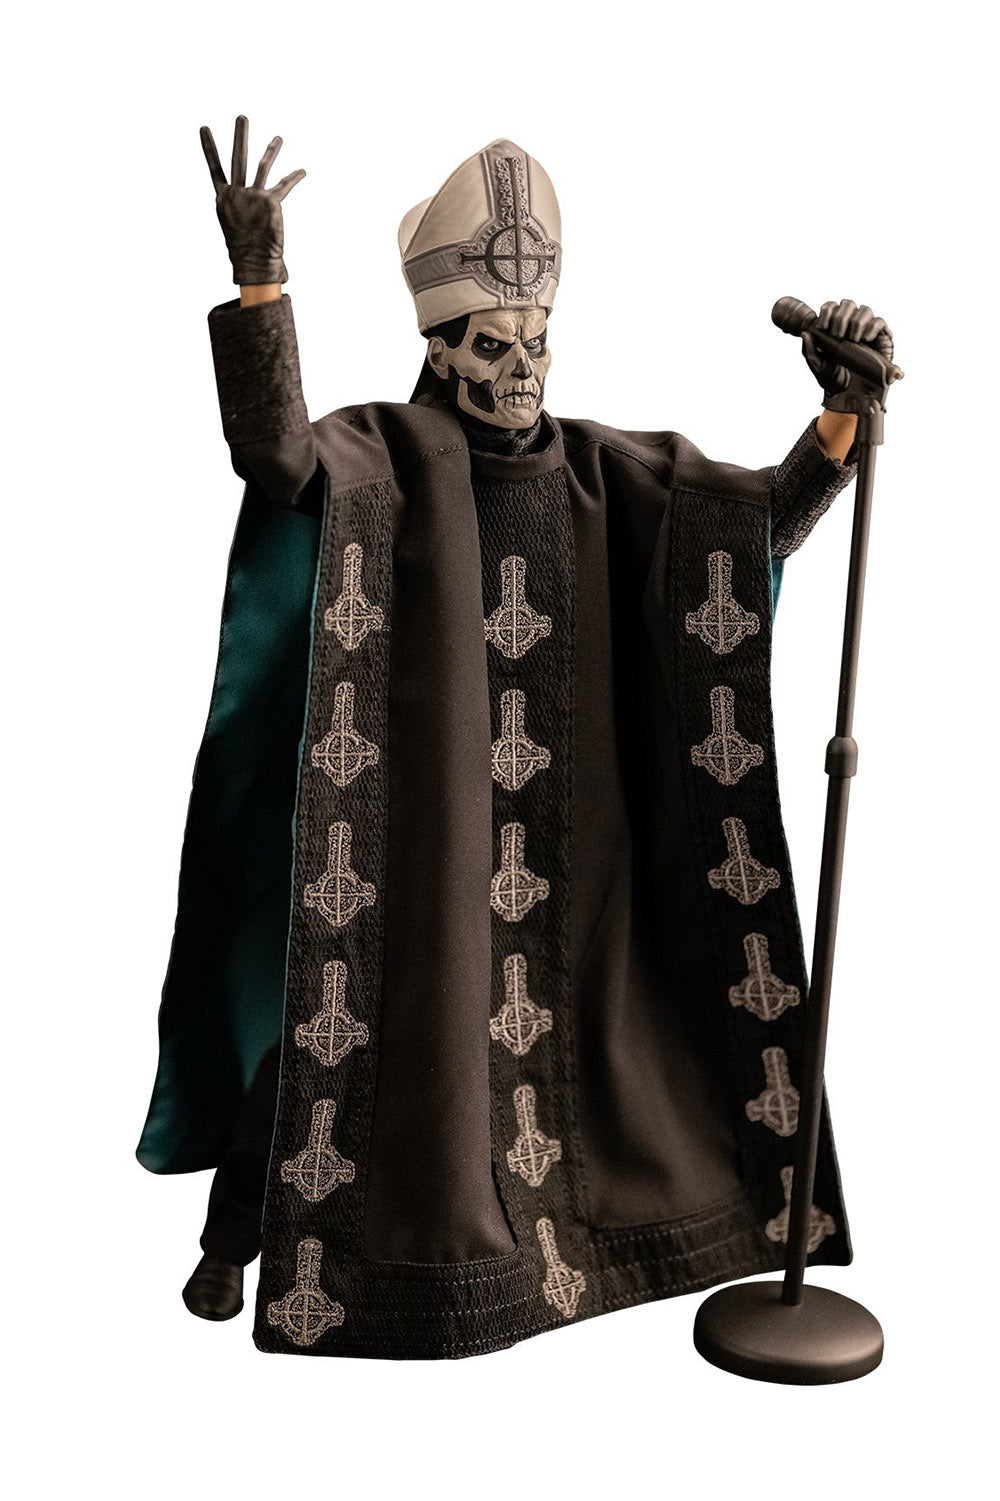 gothic priest figurine